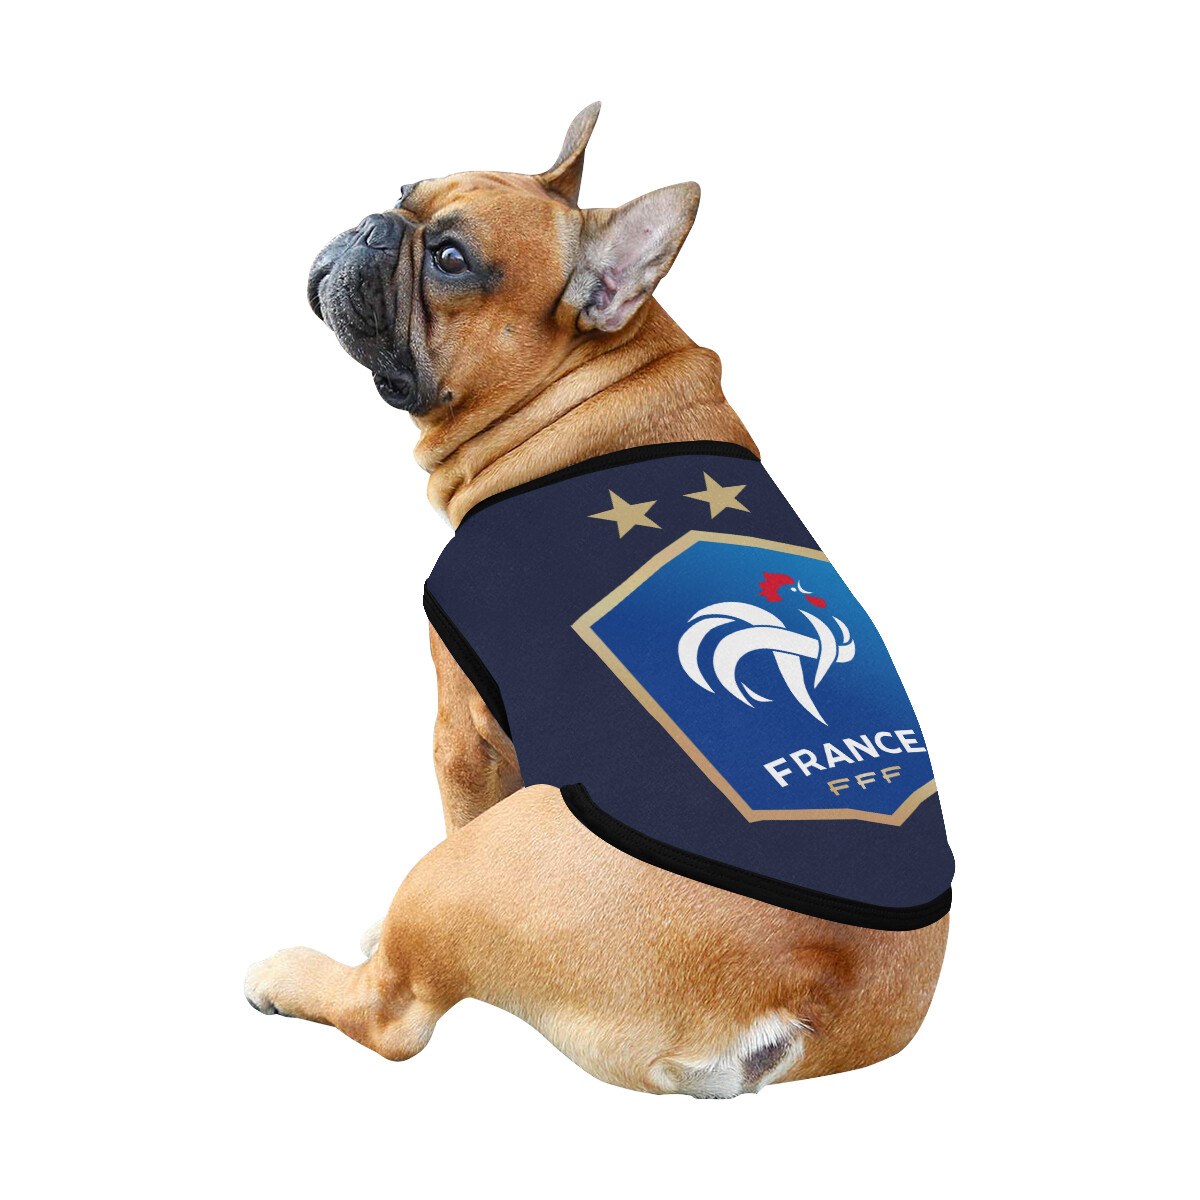 🐕🇫🇷⚽️ Allez les Bleus, France Soccer Team, Dog t-shirt, Dog Tank Top, Dog shirt, Dog clothes, Dog jersey, Gift, 7 sizes XS to 3XL, French, I love sports, blue